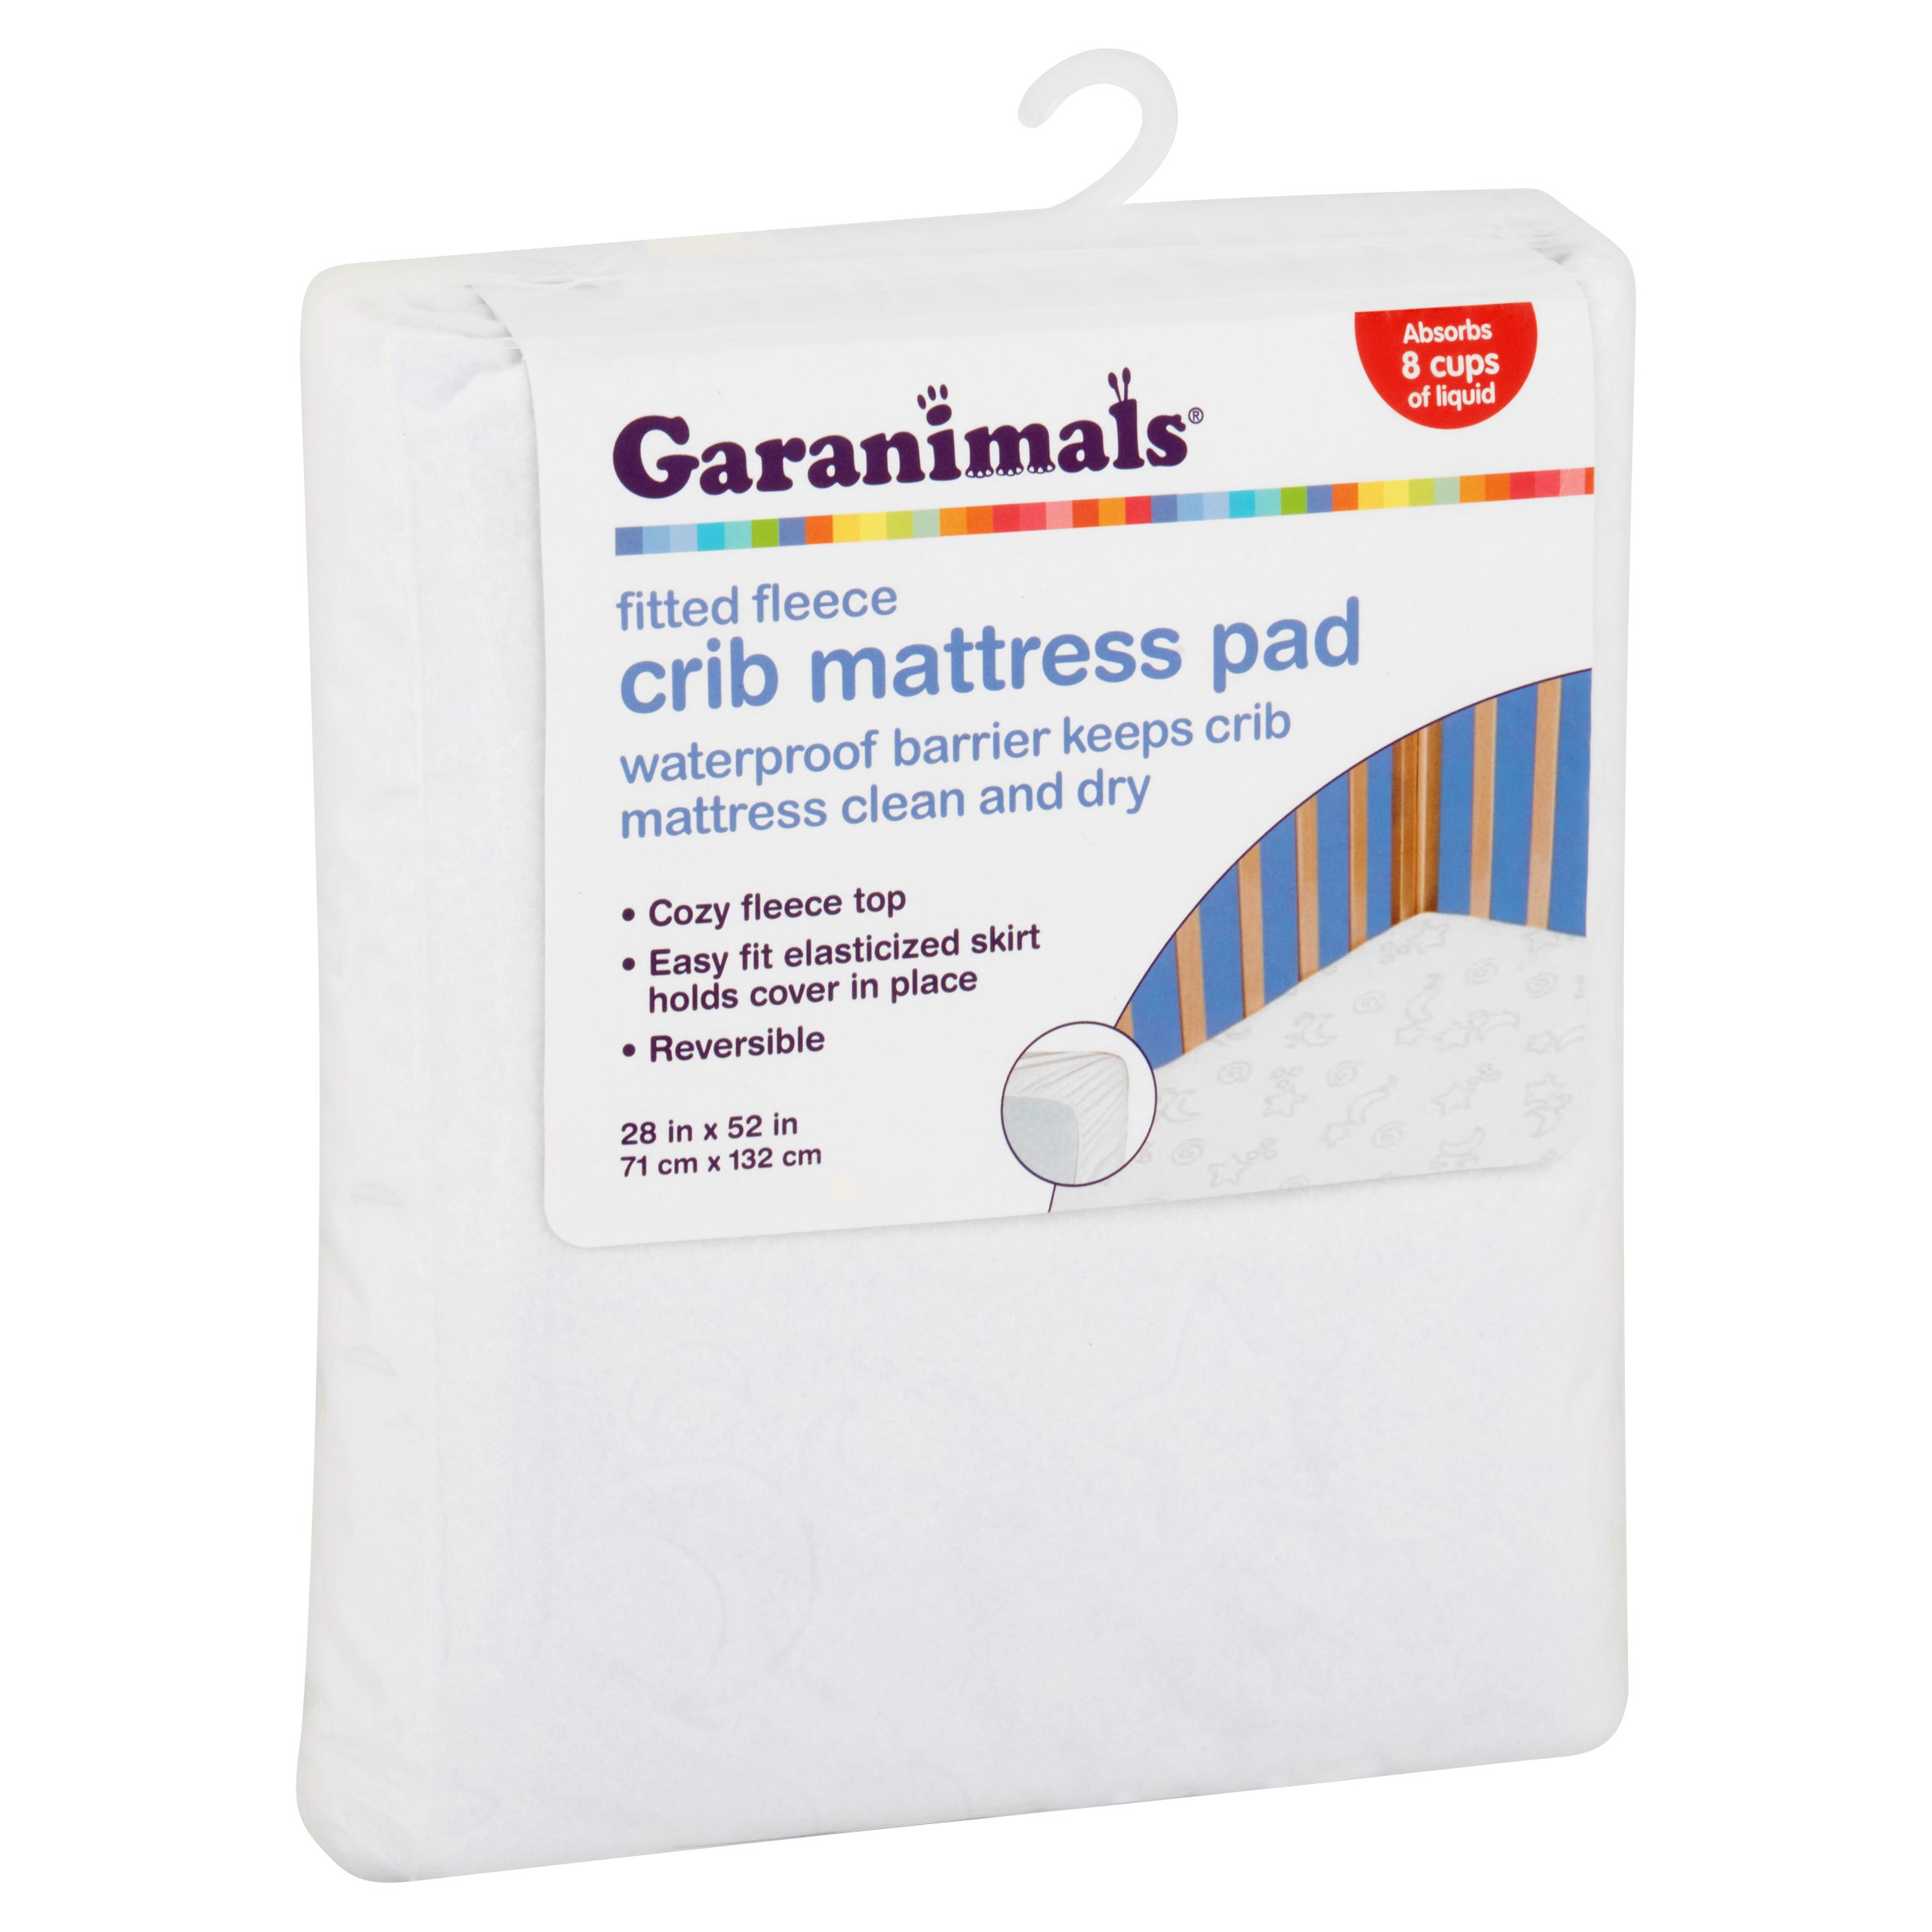 Garanimals Fitted Fleece Crib Mattress Pad - image 2 of 5